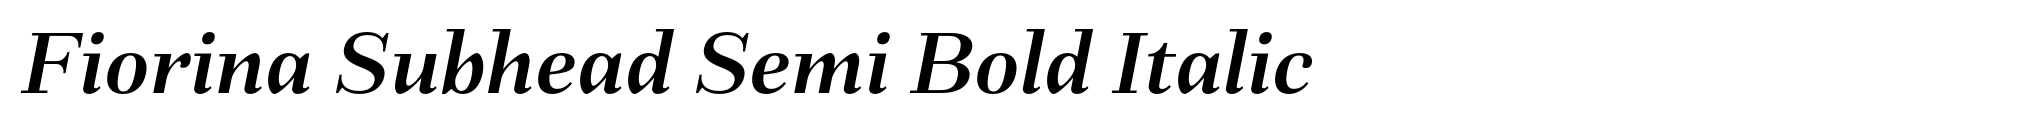 Fiorina Subhead Semi Bold Italic image